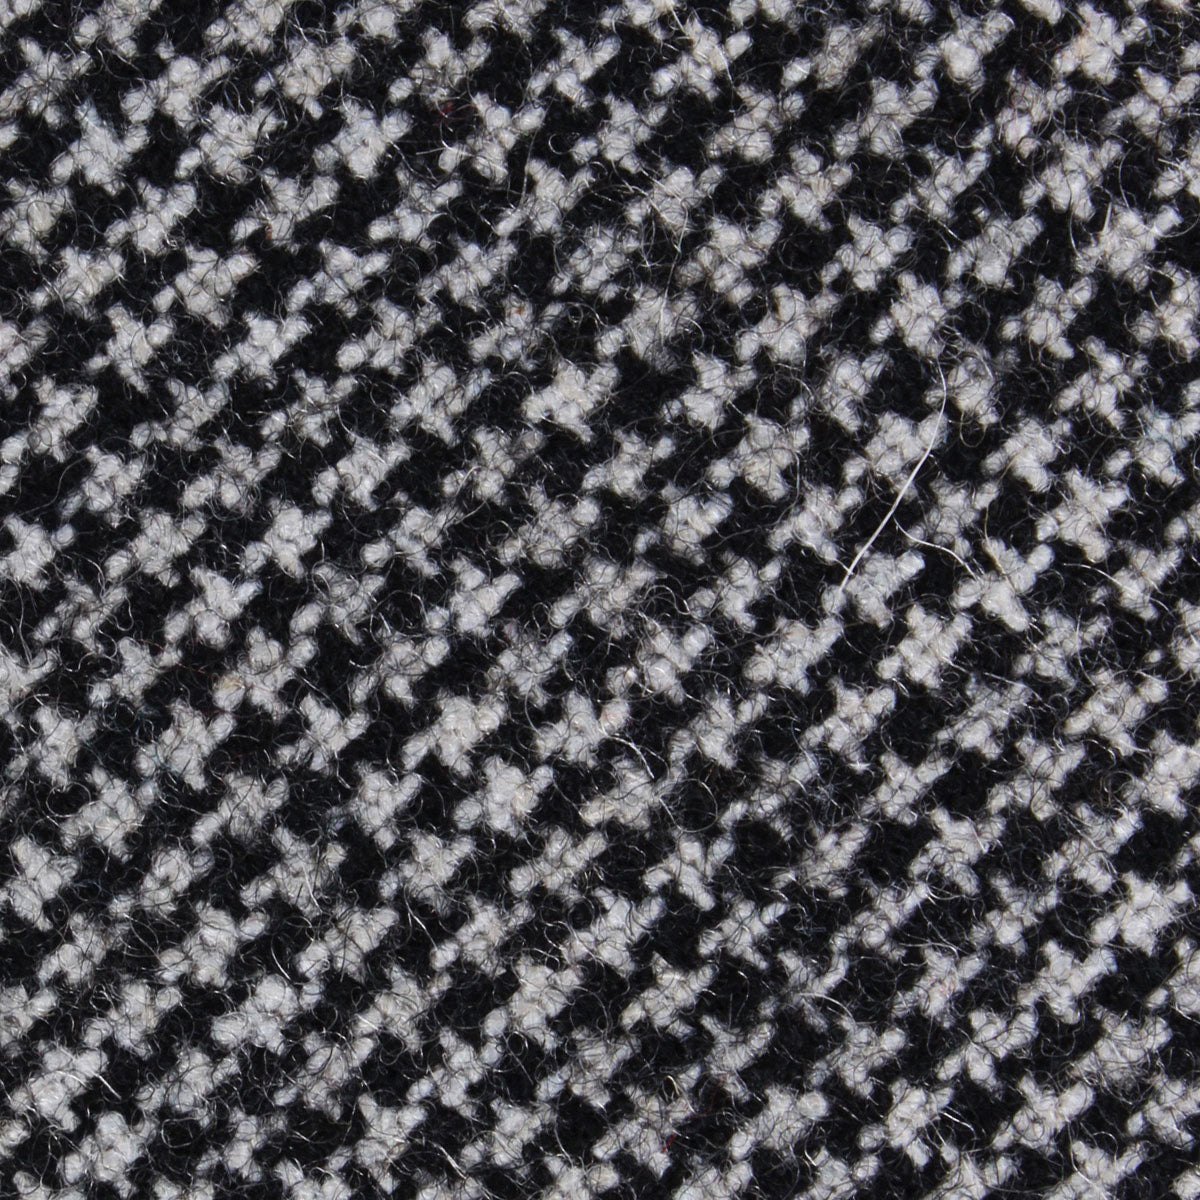 Sheepish Black Houndstooth Wool Fabric Self Diamond Bowtie